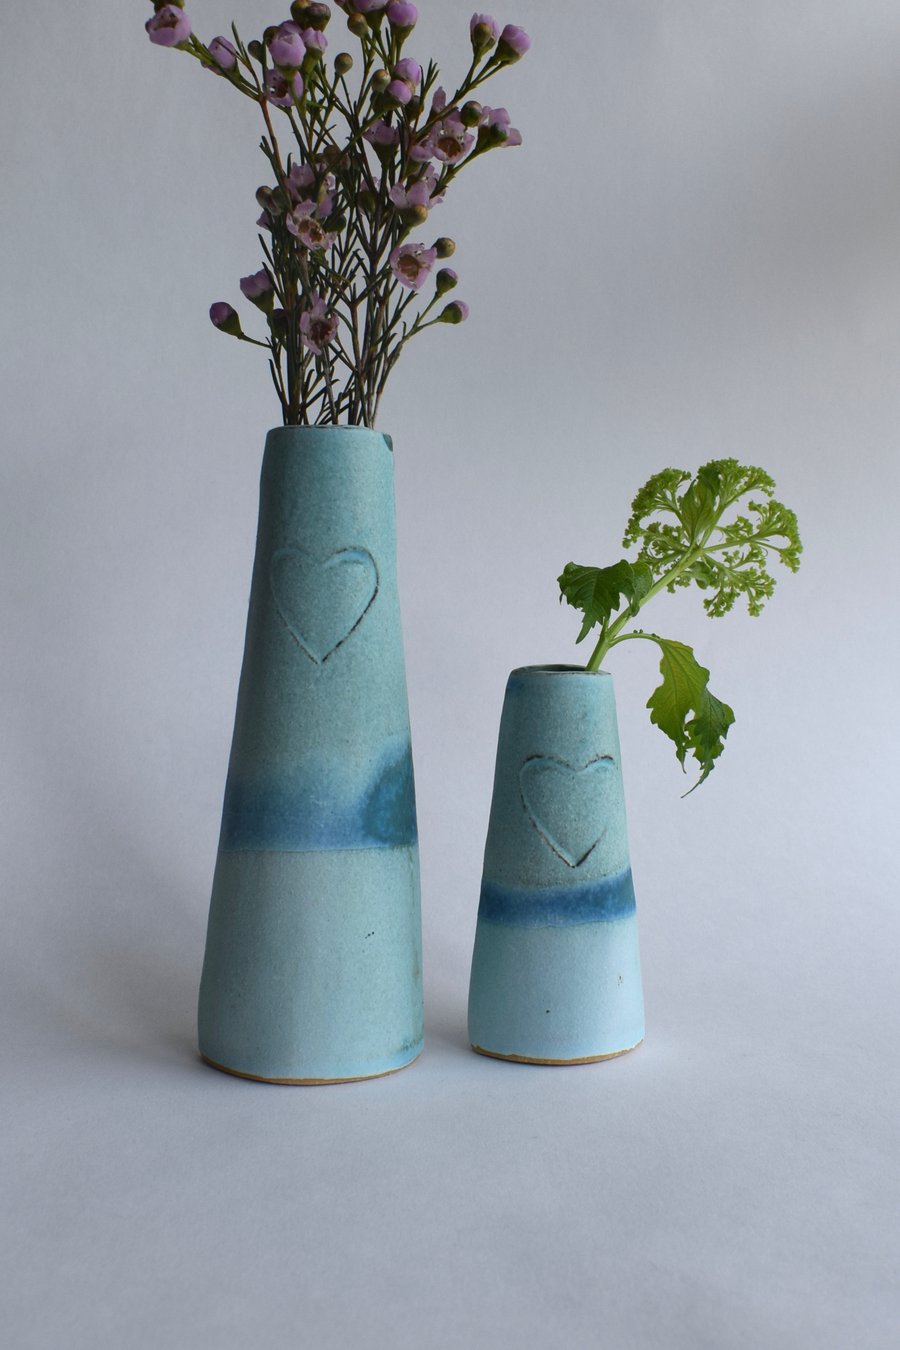 Heart Vases in Turquoise Glazed Ceramic 